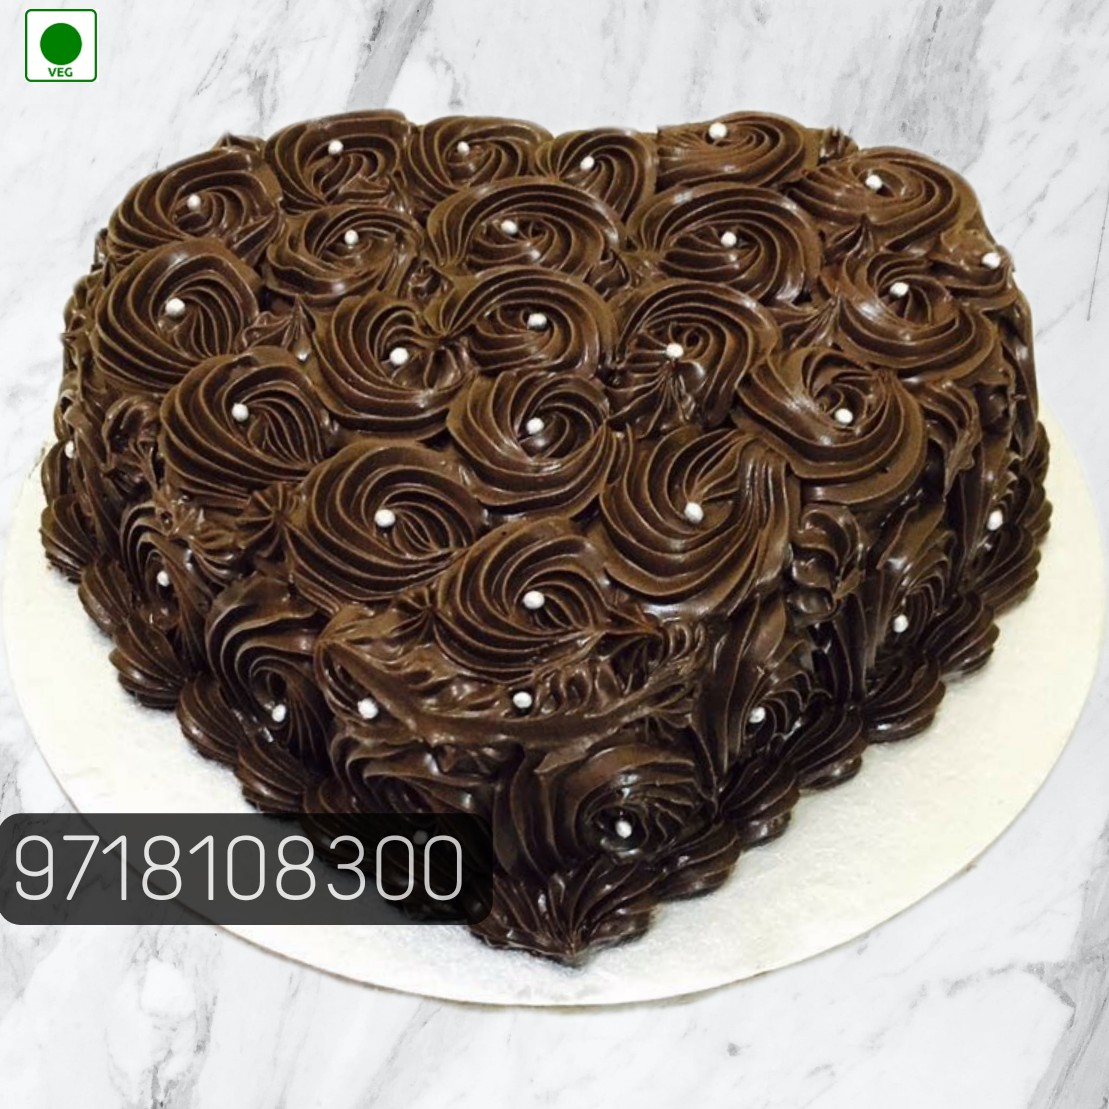 Chocolate Cake Designs For Birthday Girl | Chocolate Cake | Yummy cake